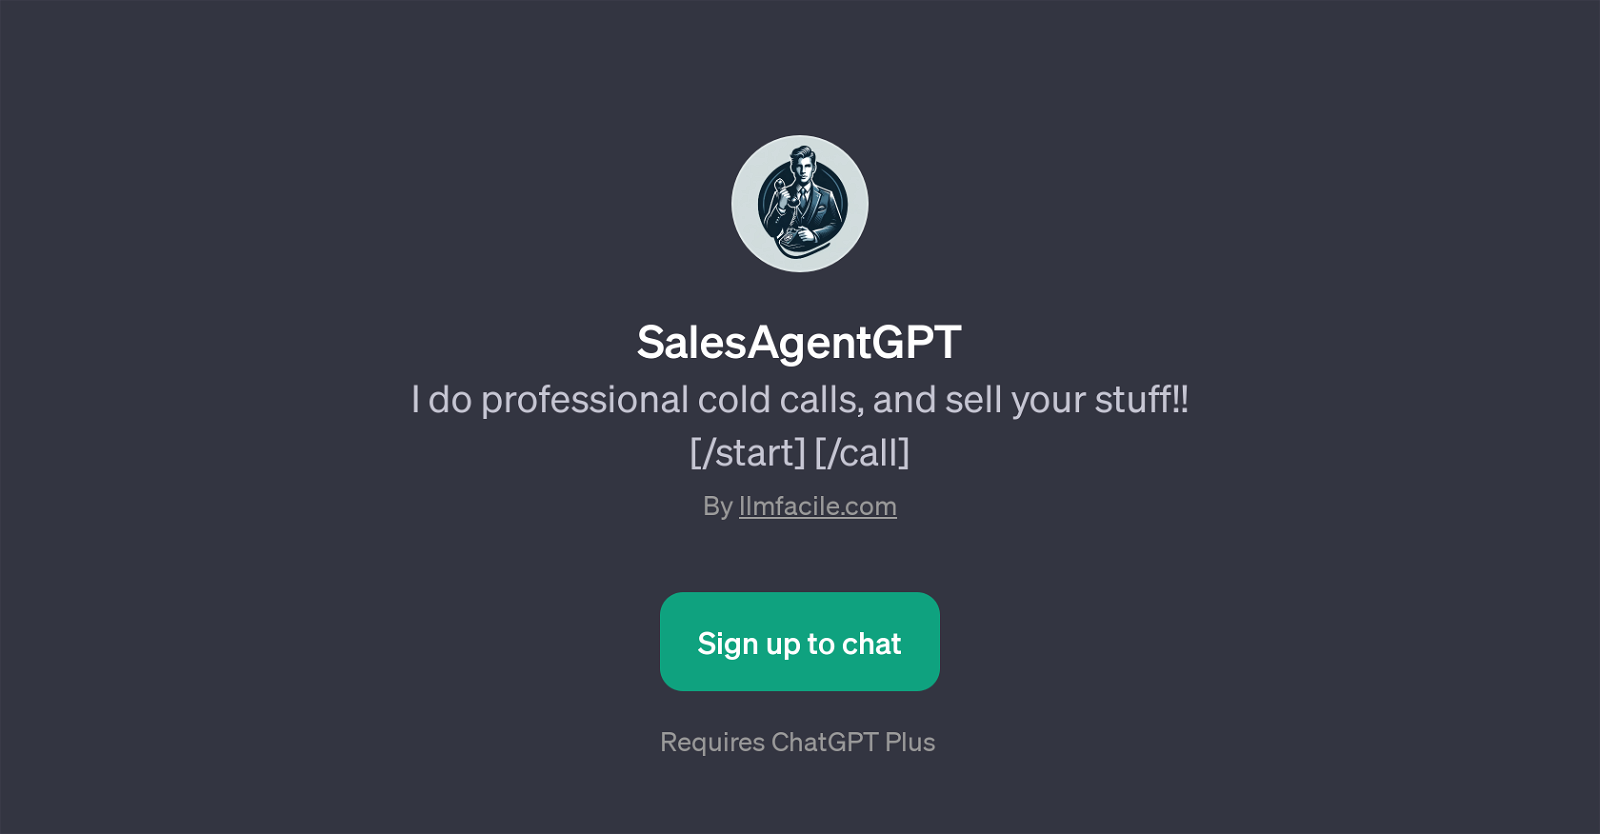 SalesAgentGPT website